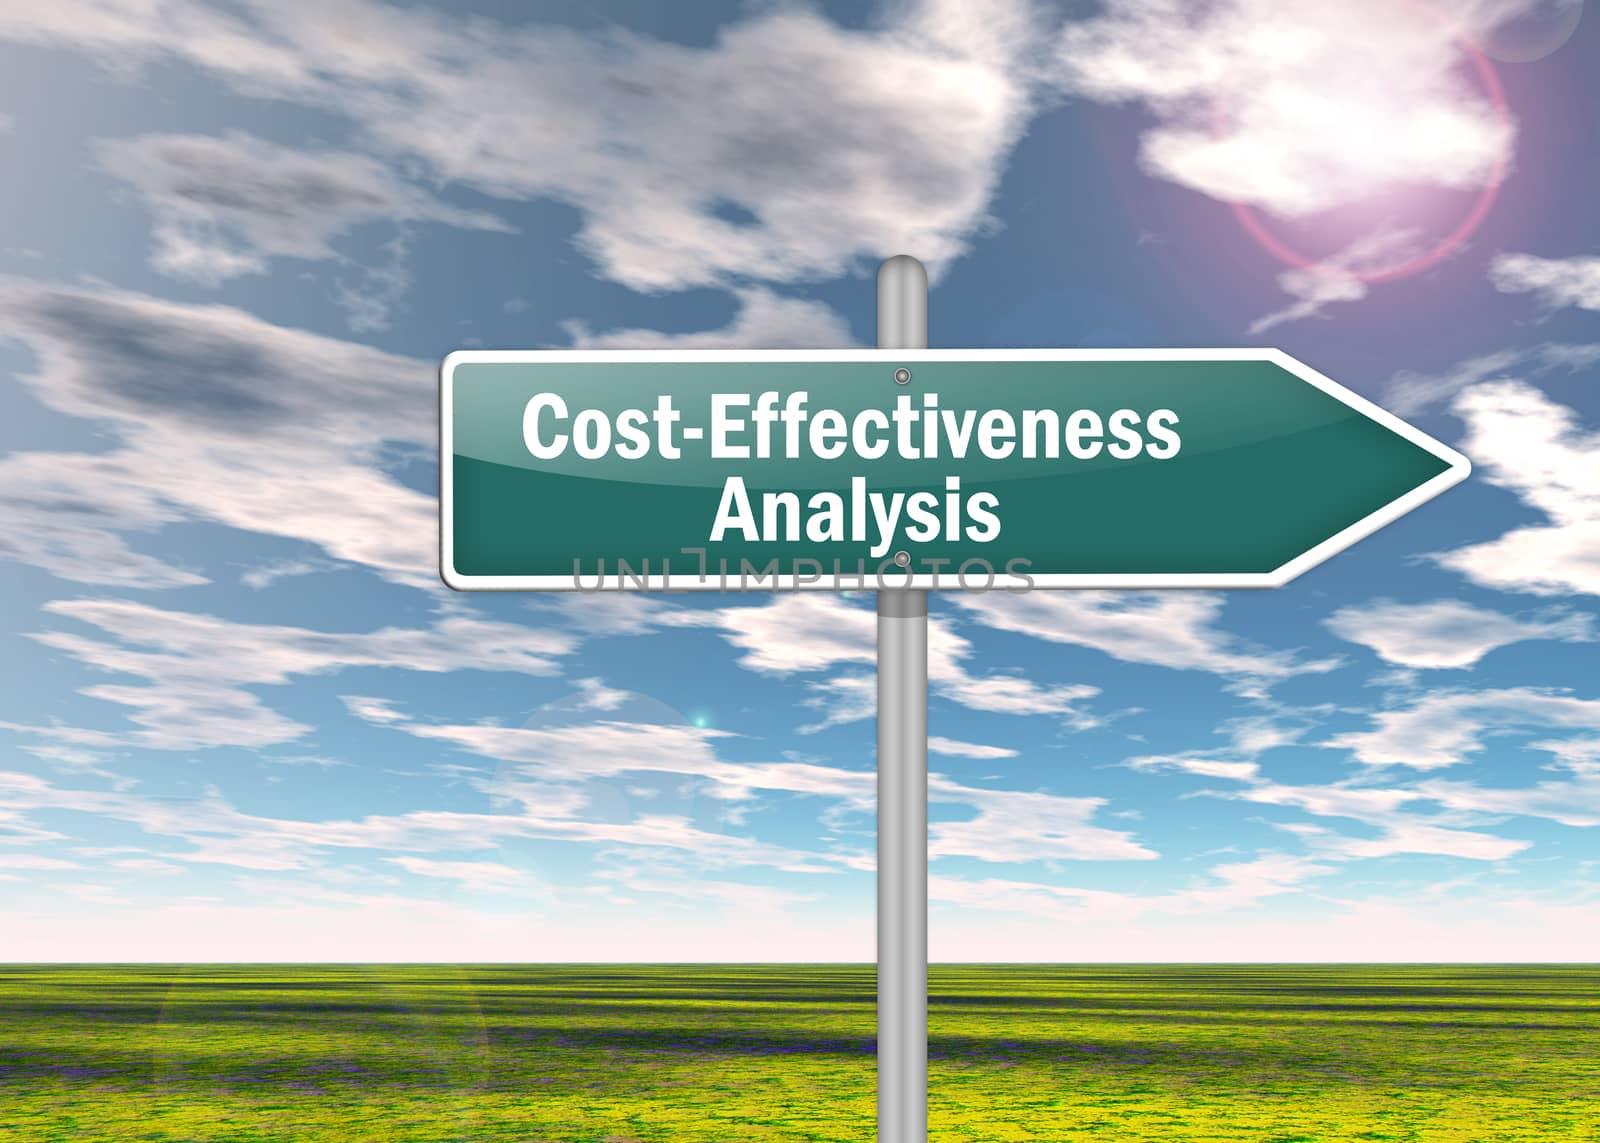 Signpost "Cost-Effectiveness Analysis"